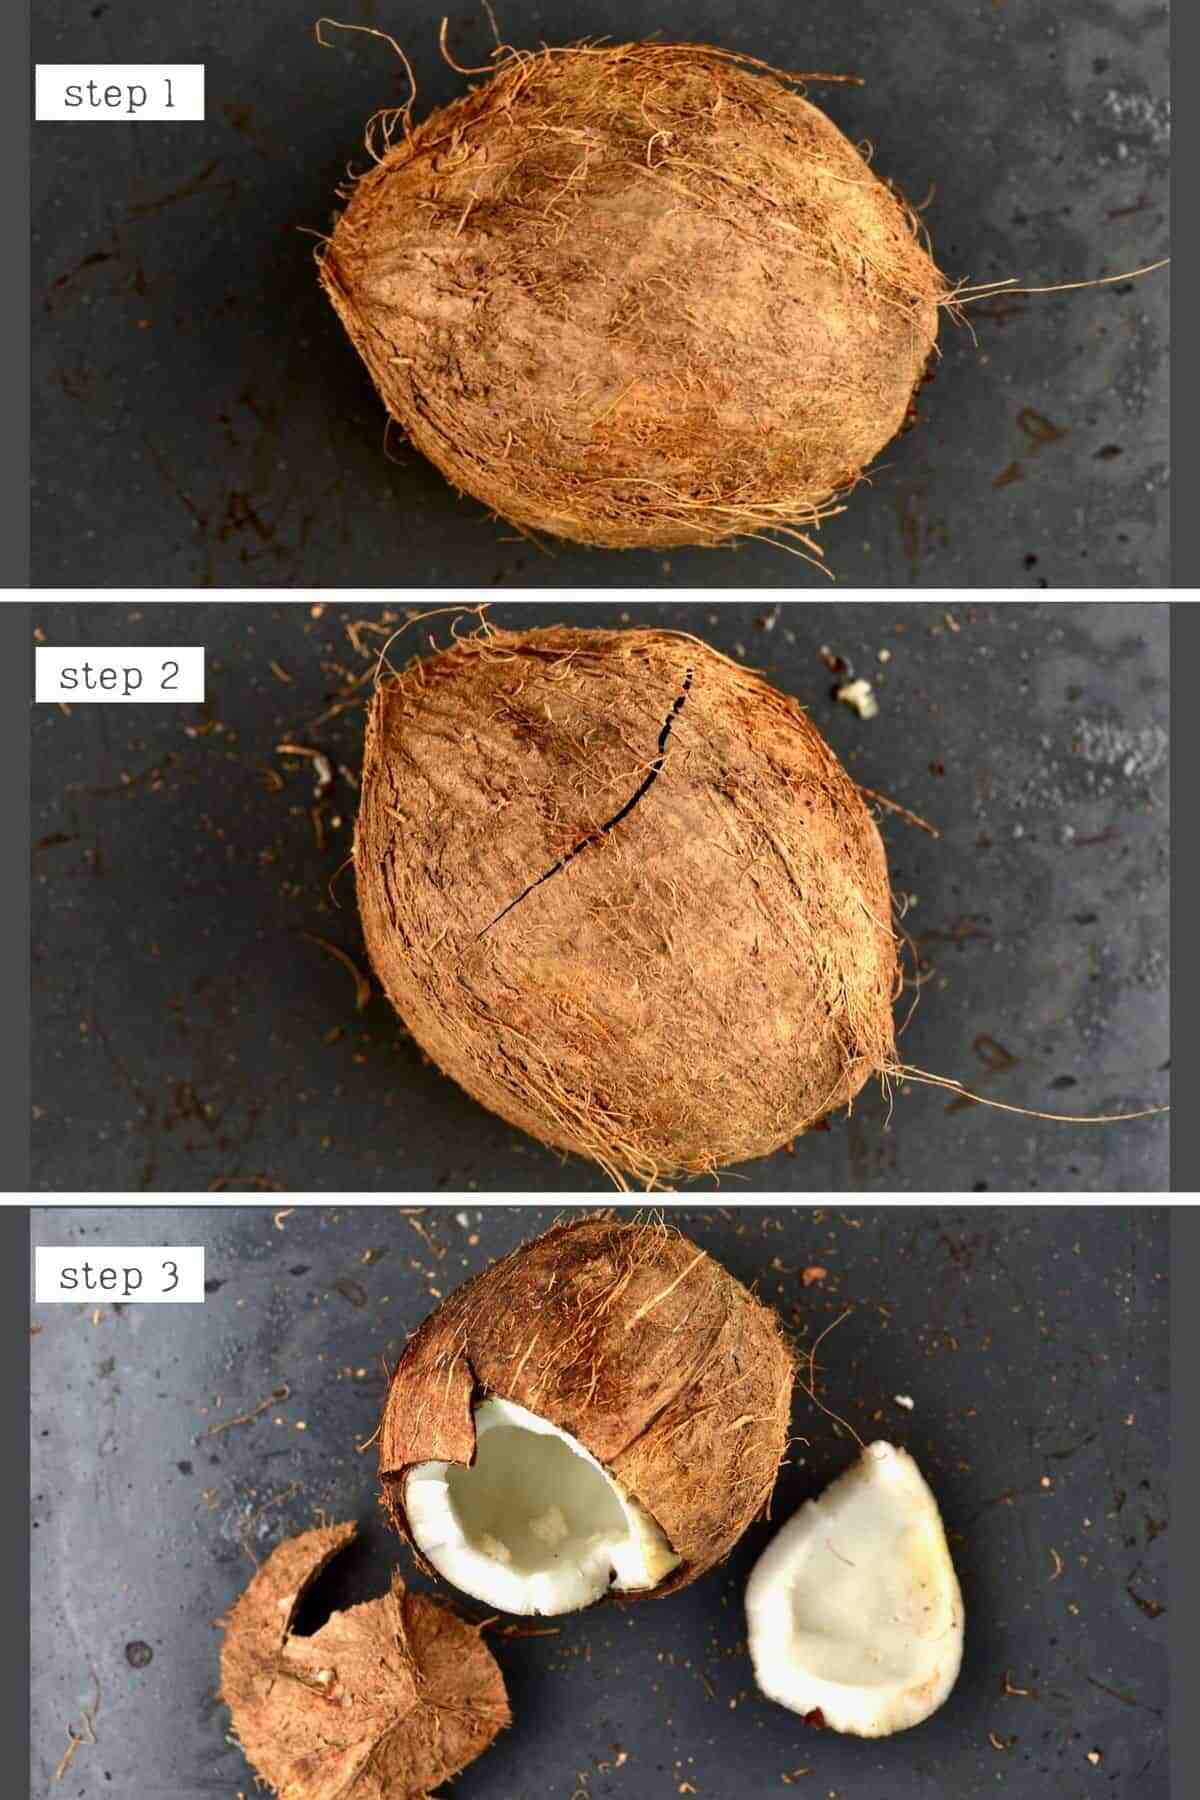 How do you crack open a coconut?